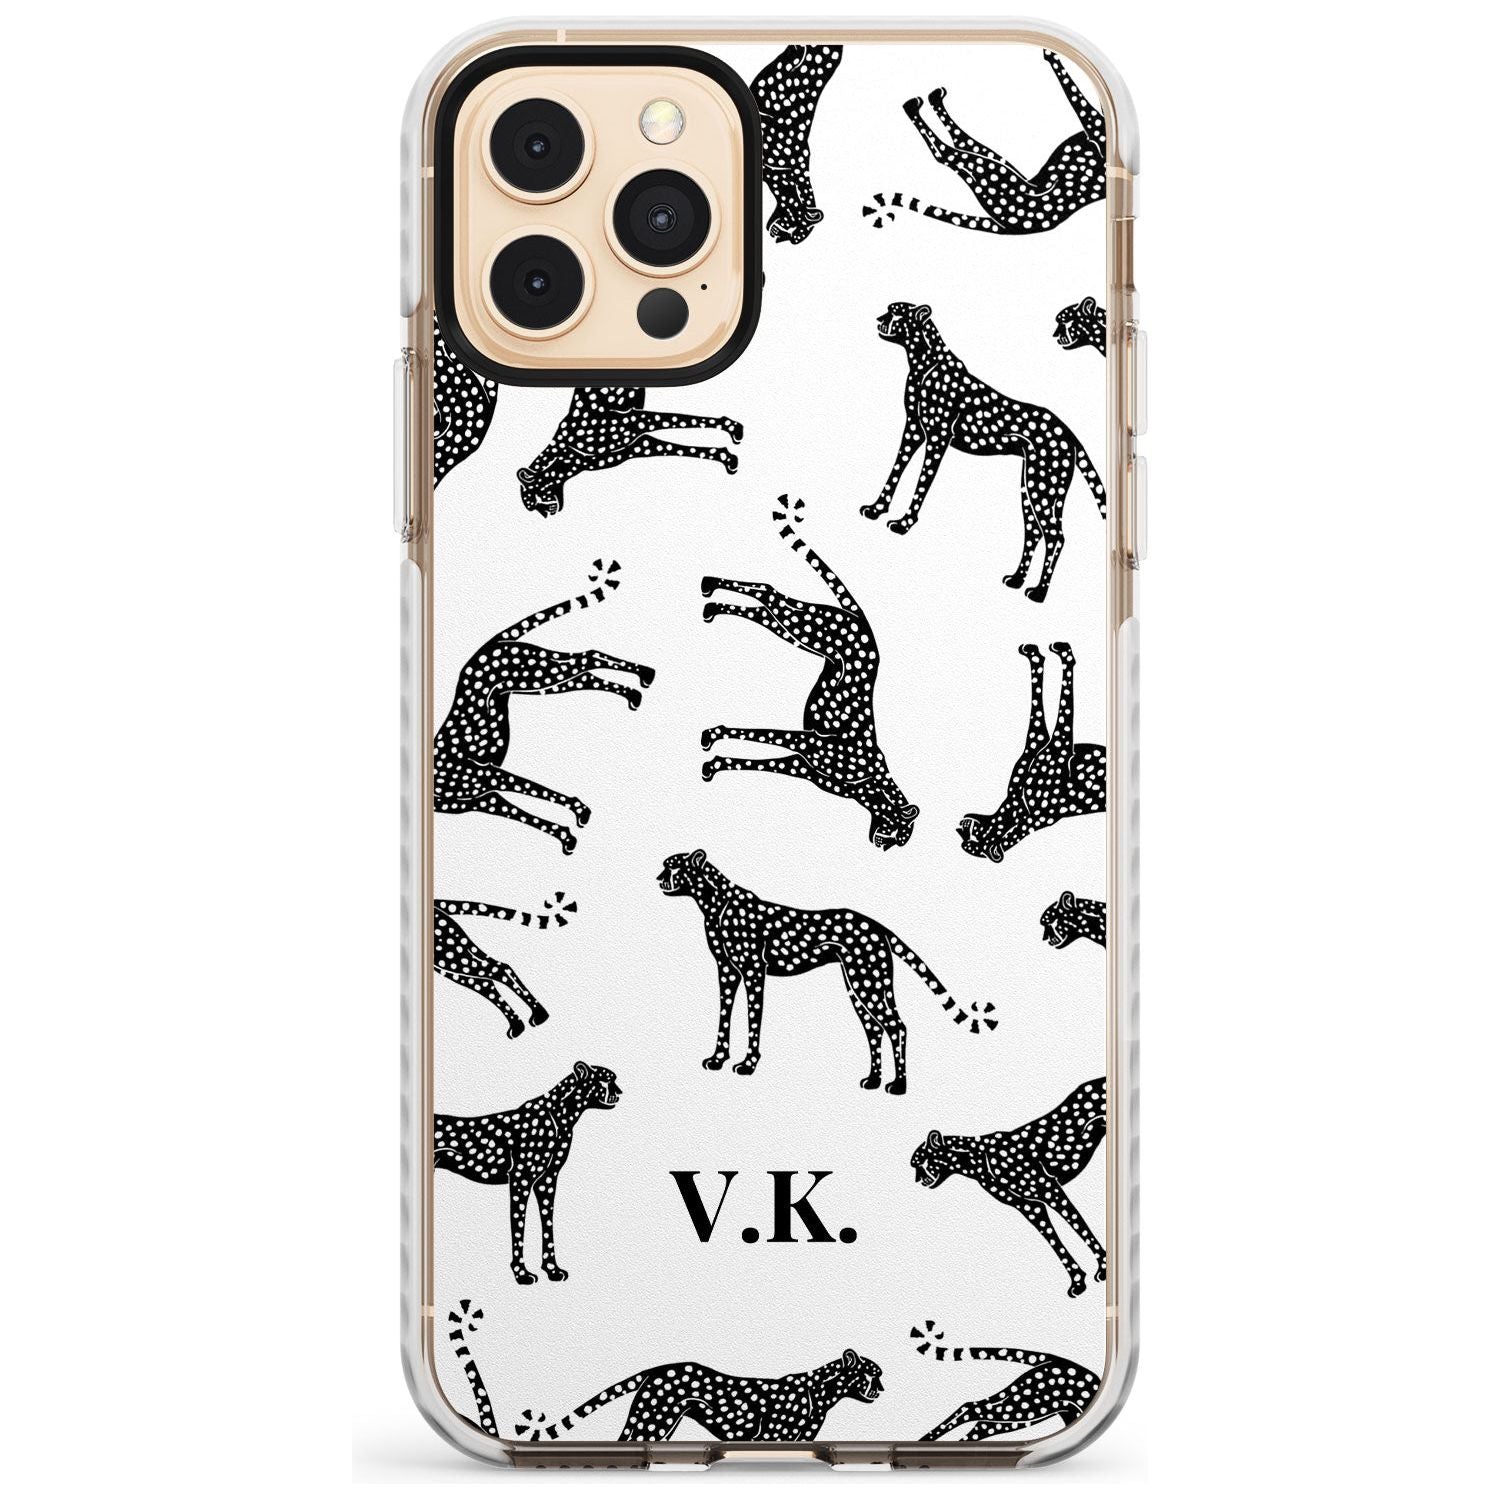 Personalised Cheetah Pattern: Black & White Slim TPU Phone Case for iPhone 11 Pro Max